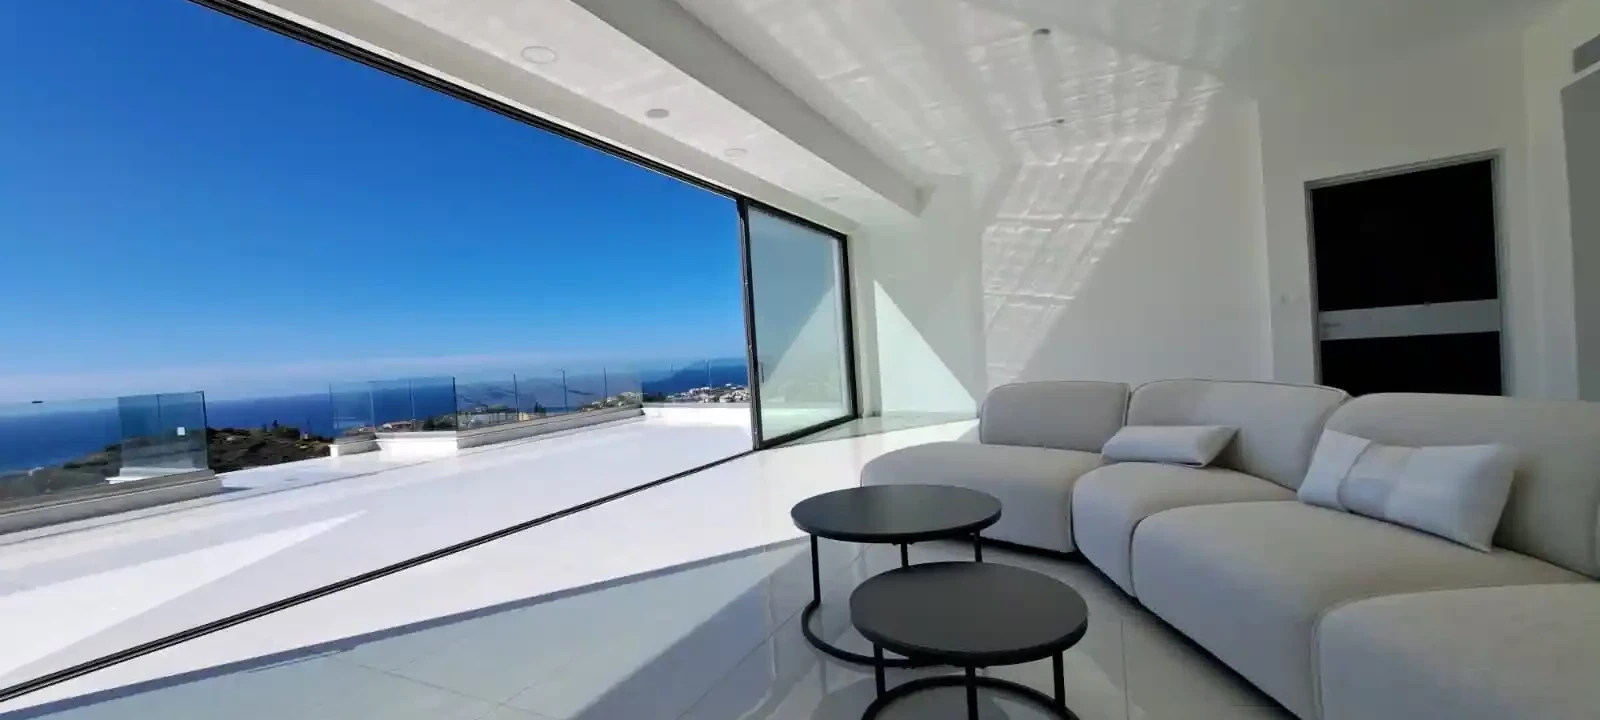 8-bedroom villa fоr sаle €4.500.000, image 1